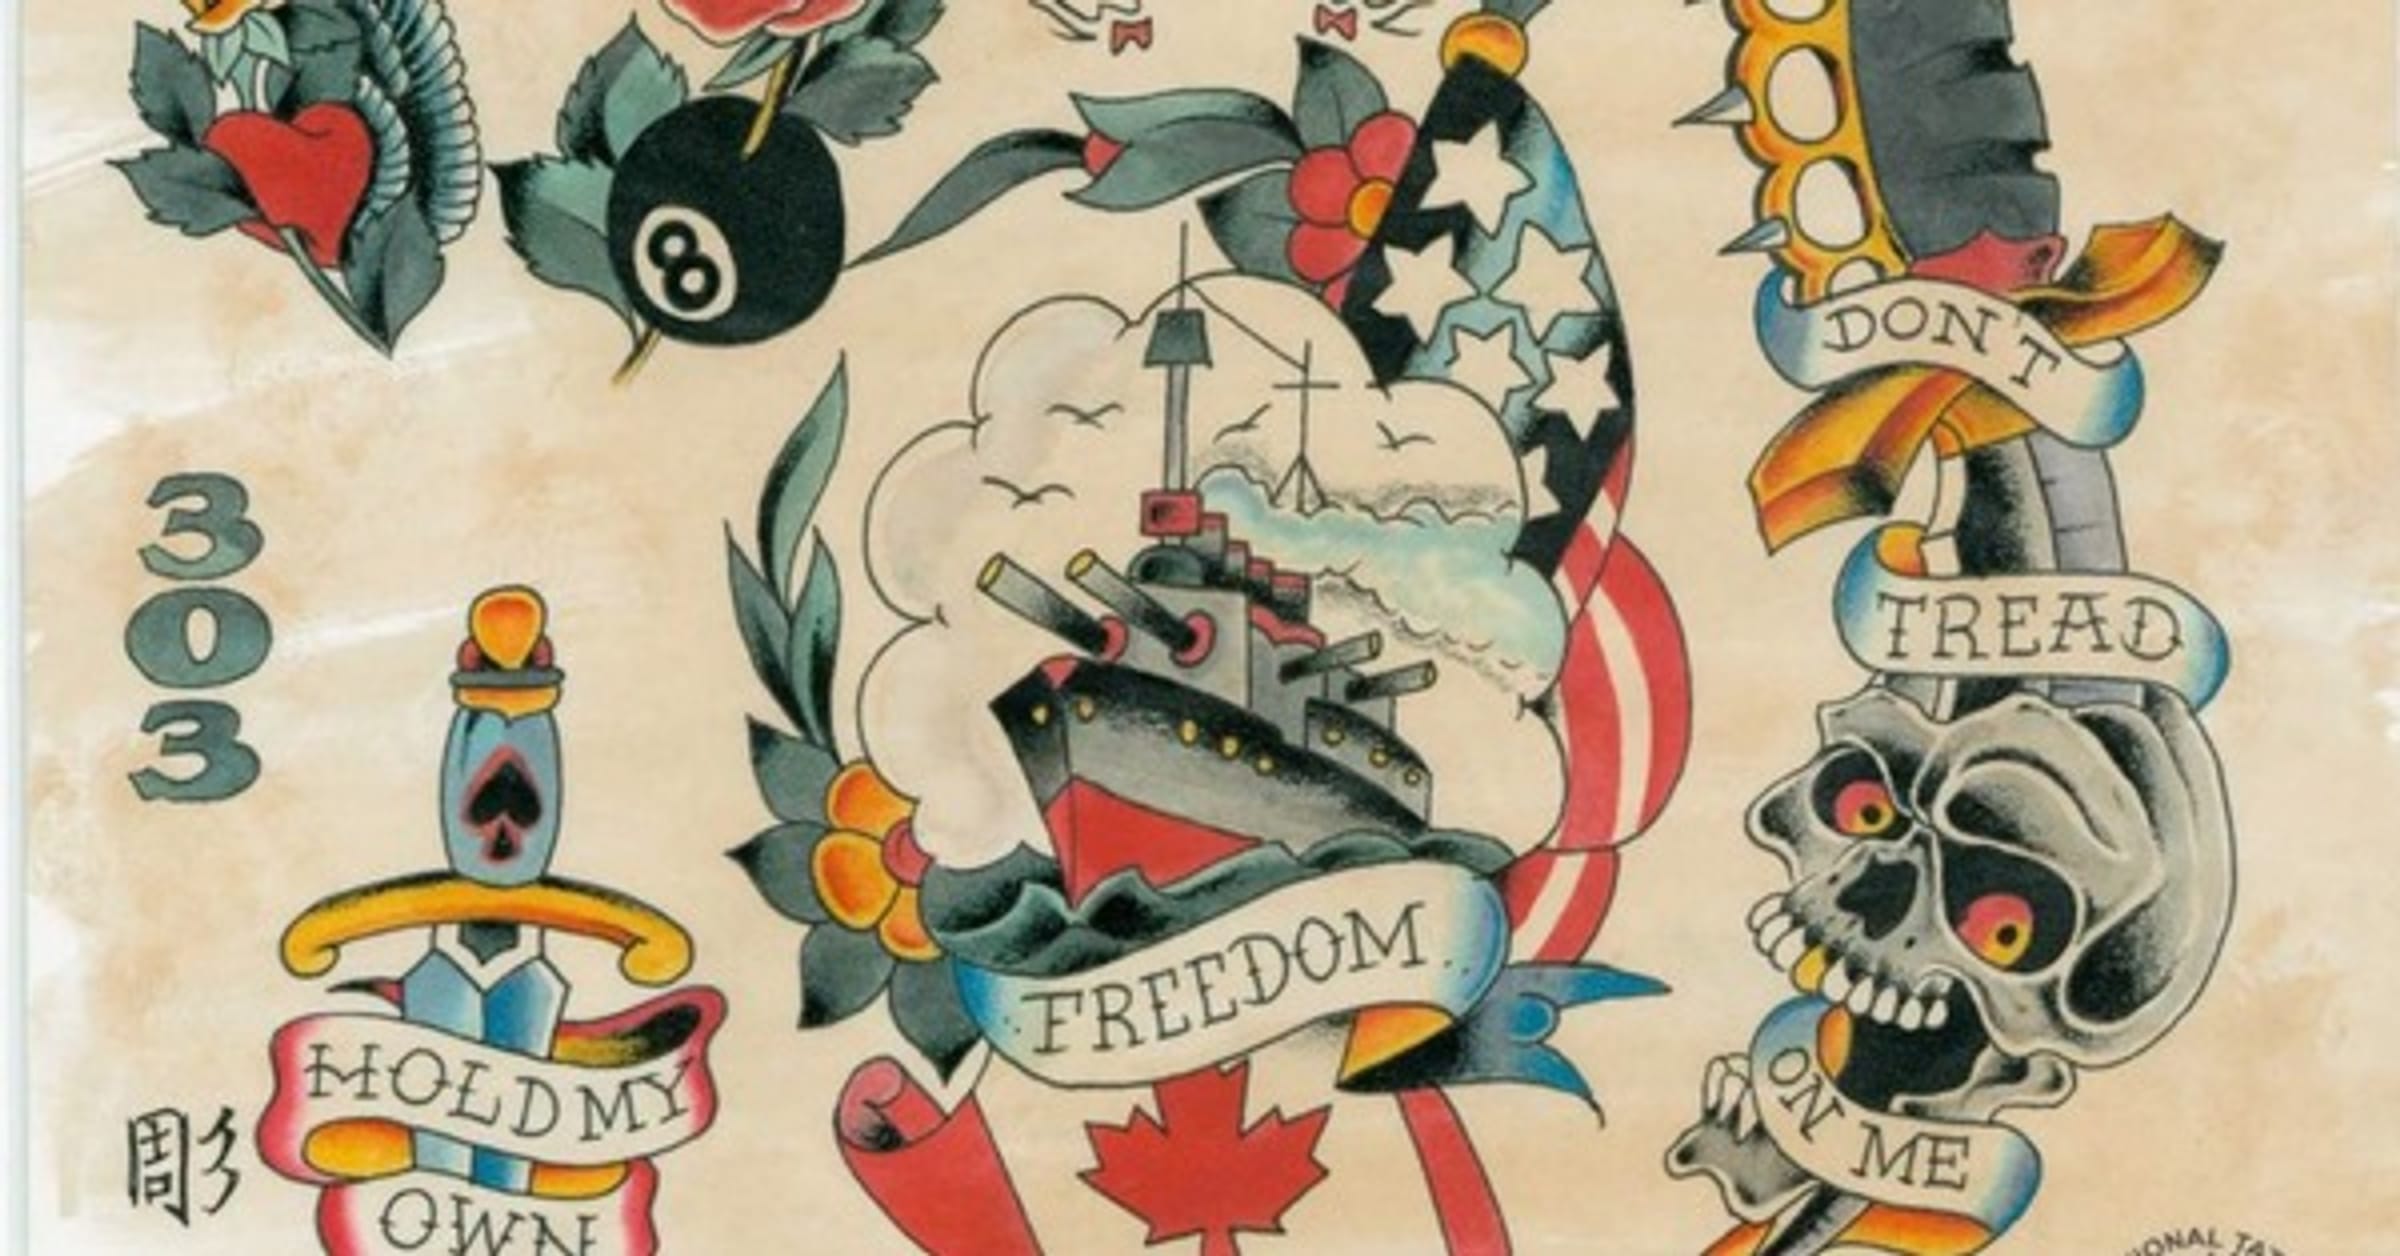 sailor jerry pirate tattoo